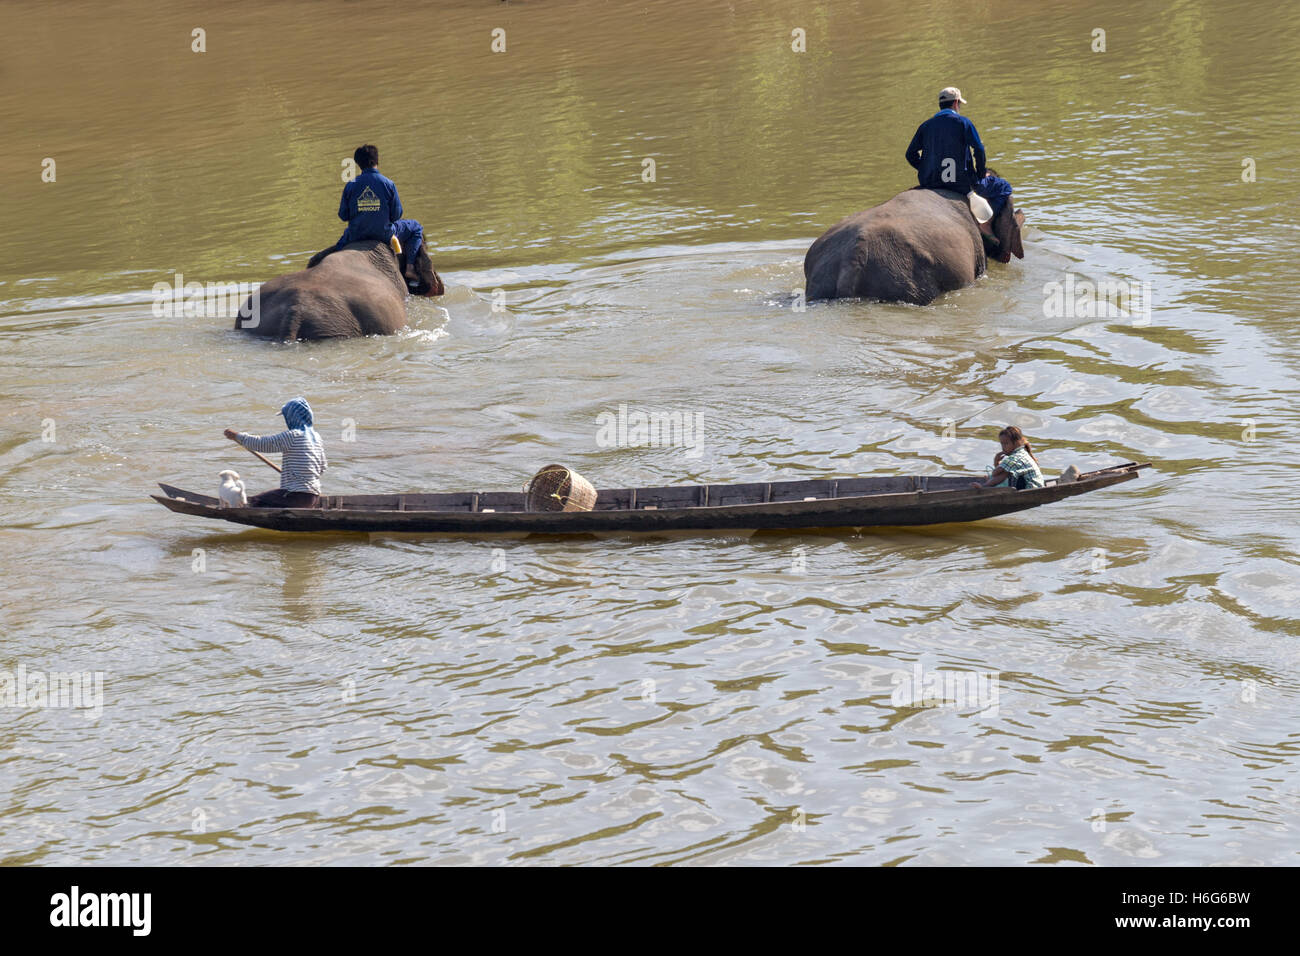 Asian (Asiatic) elephant, Elephas maximus, & boat crossing Nam Khan river, Elephant Village, Ban Xieng Lom, Luang Prabang, Laos Stock Photo